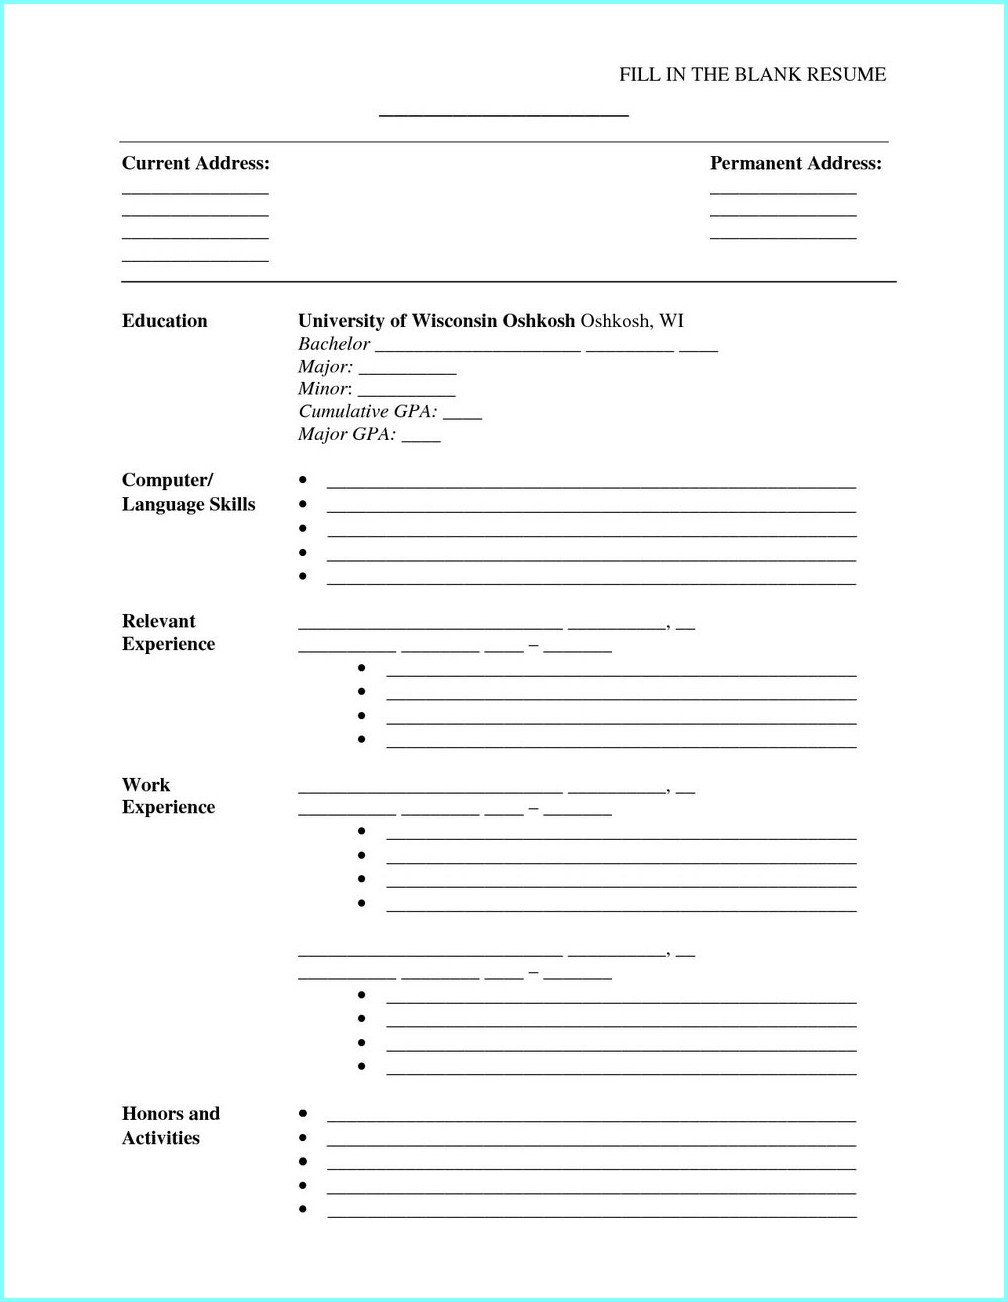 Fill In The Blank Resume Worksheet  Resume  Resume Examples Regarding Fill In The Blank Resume Worksheet